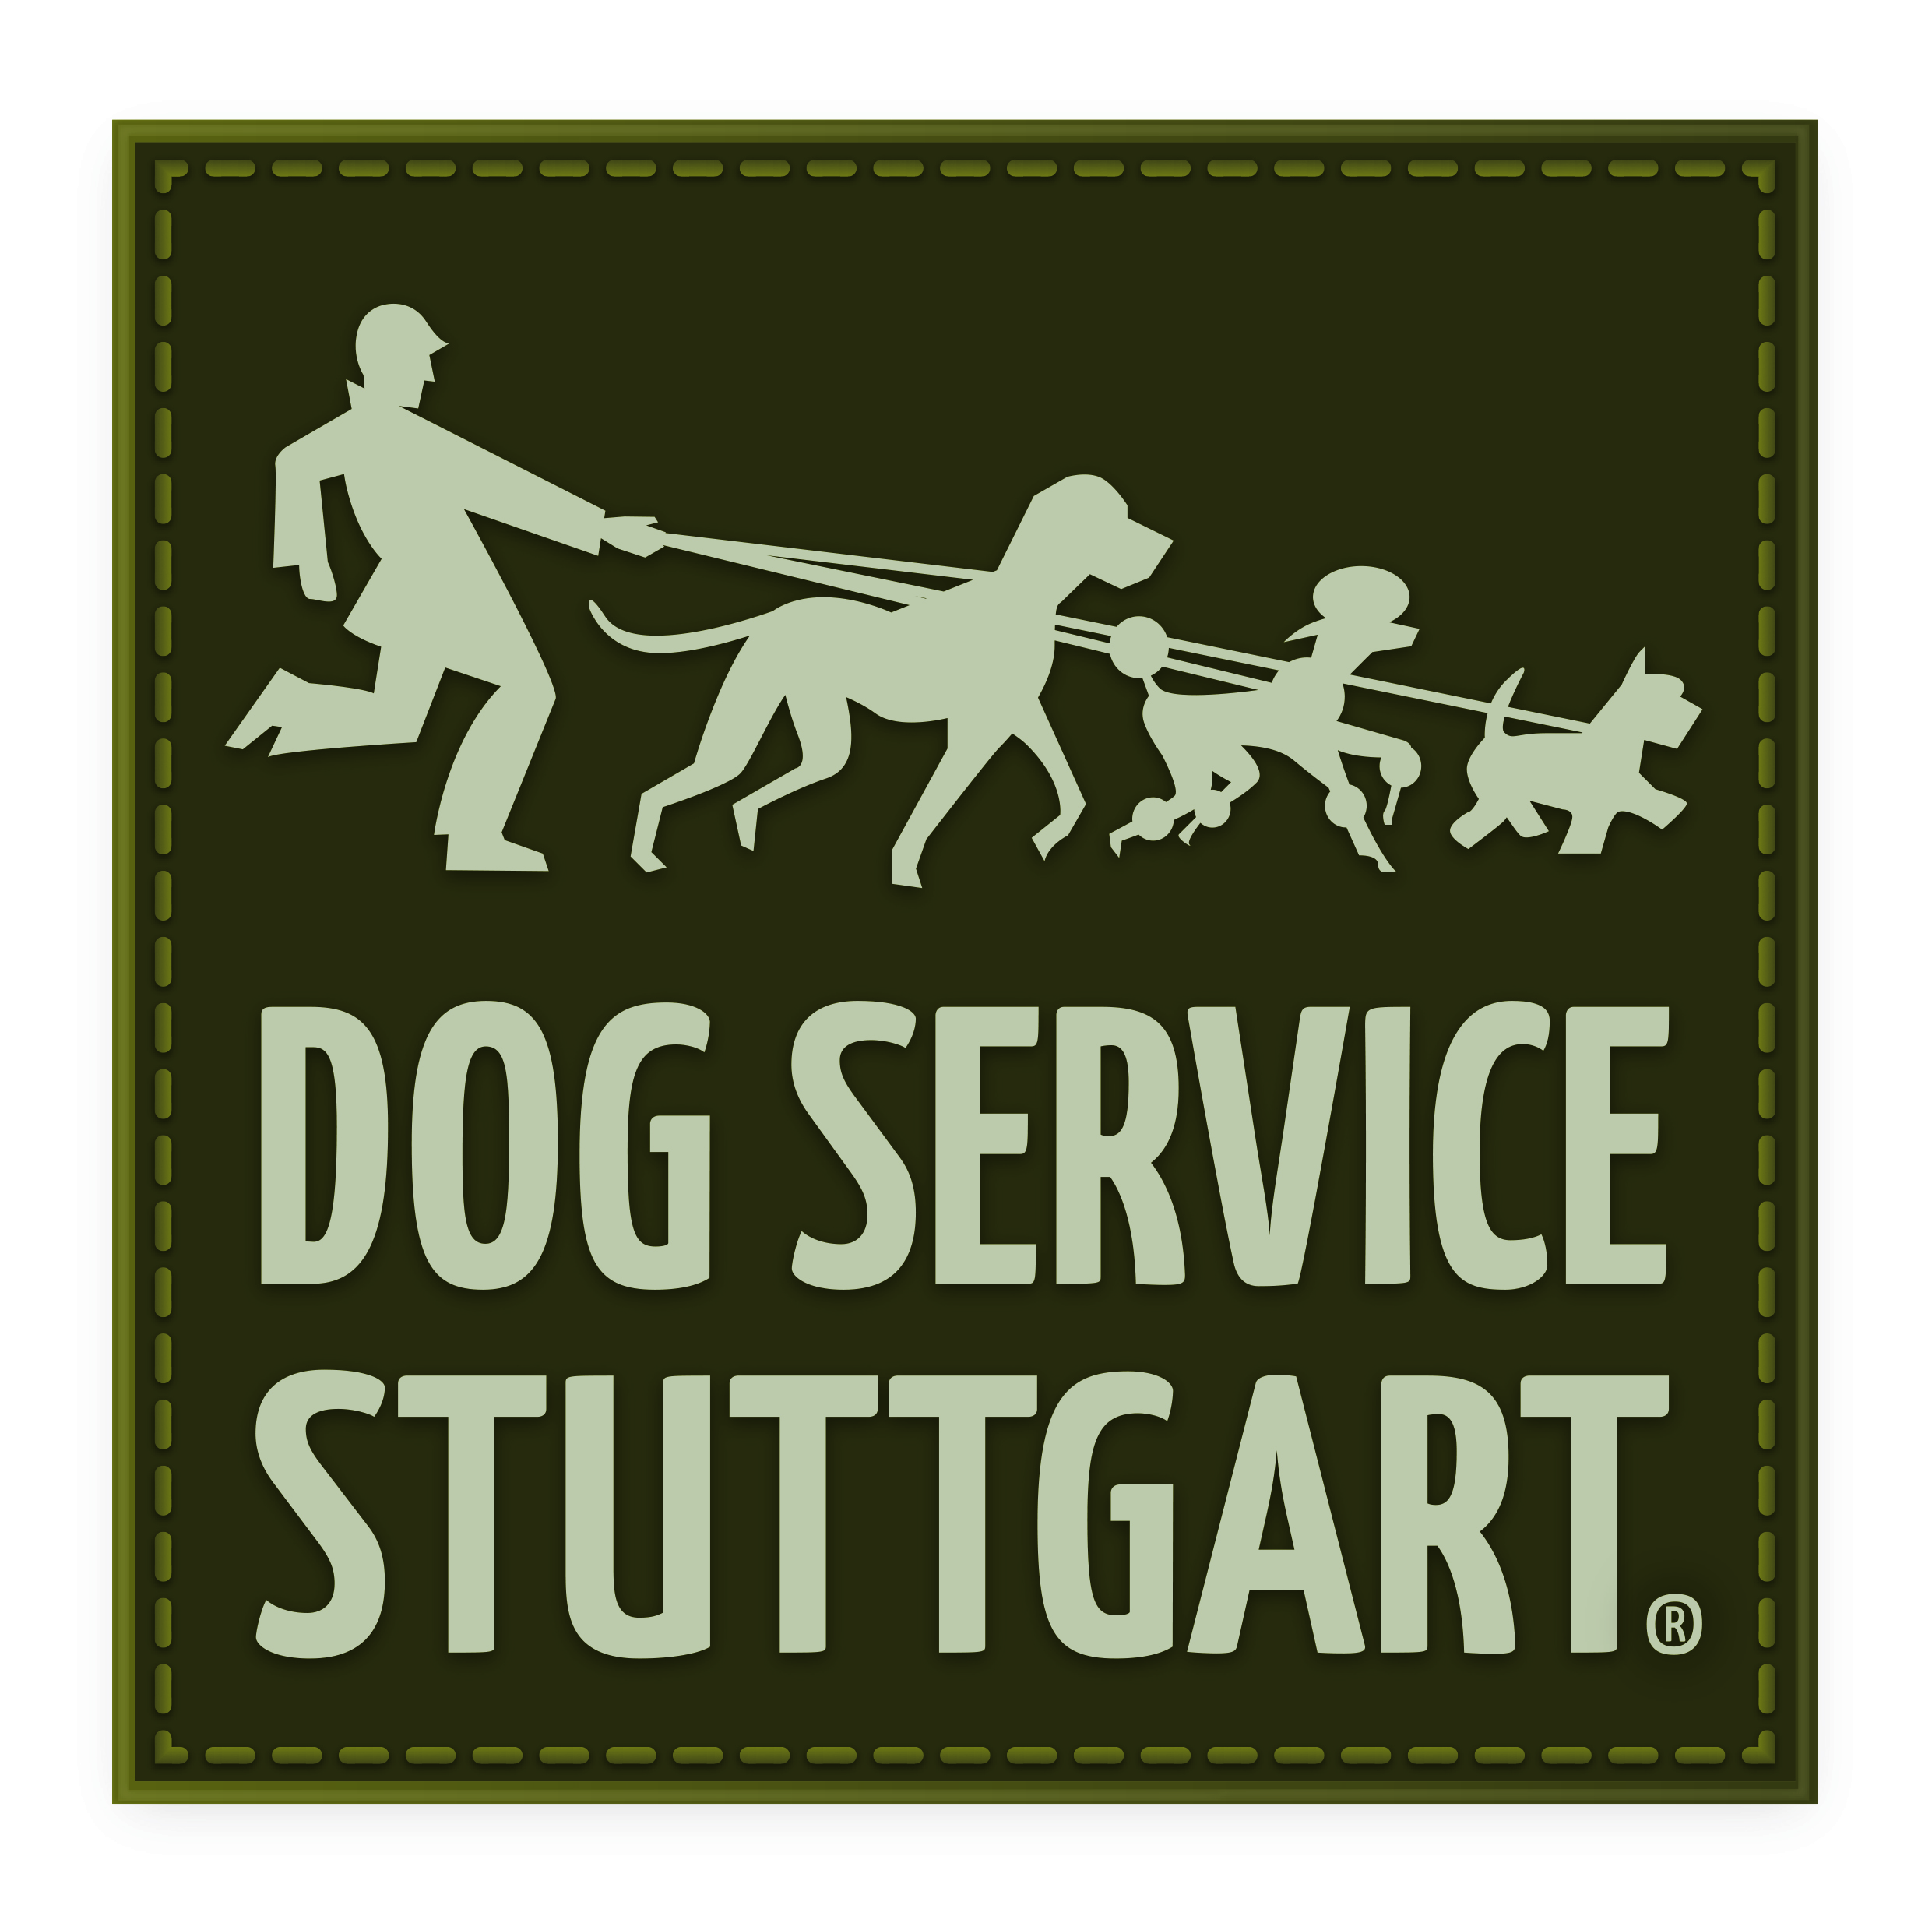 (c) Dogservice-stuttgart.de